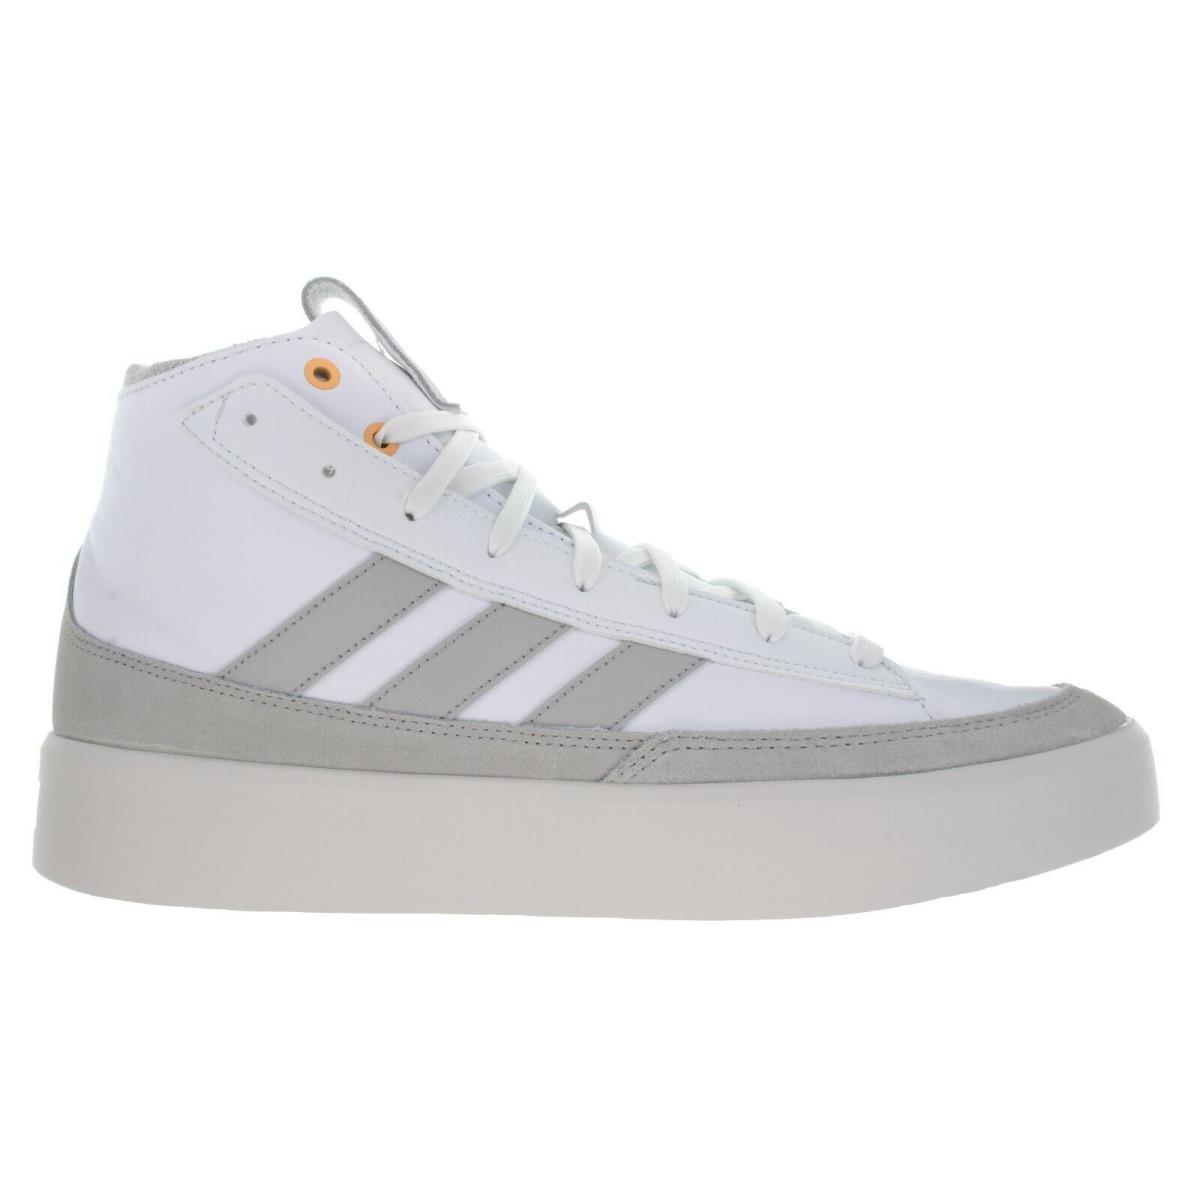 Adidas Men`s Znsored HI White - Grey Skate Shoes Size 12 - 13 - Cloud White, Grey Two, Acid Orange